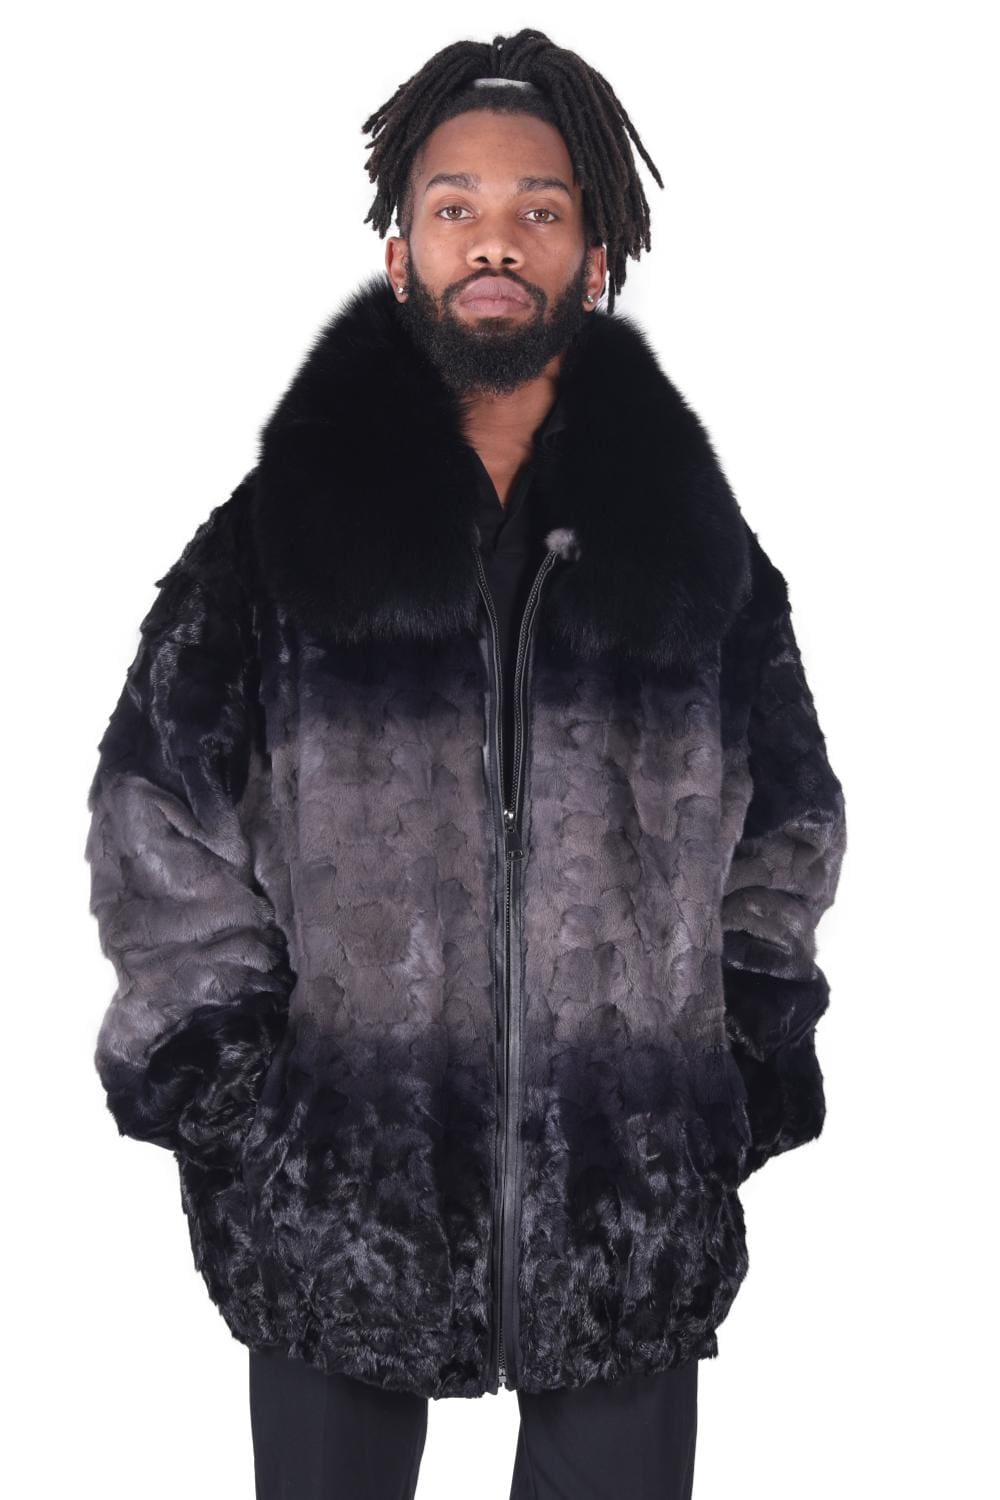 M6 2 man's mink fur coat degrade Ugent Furs